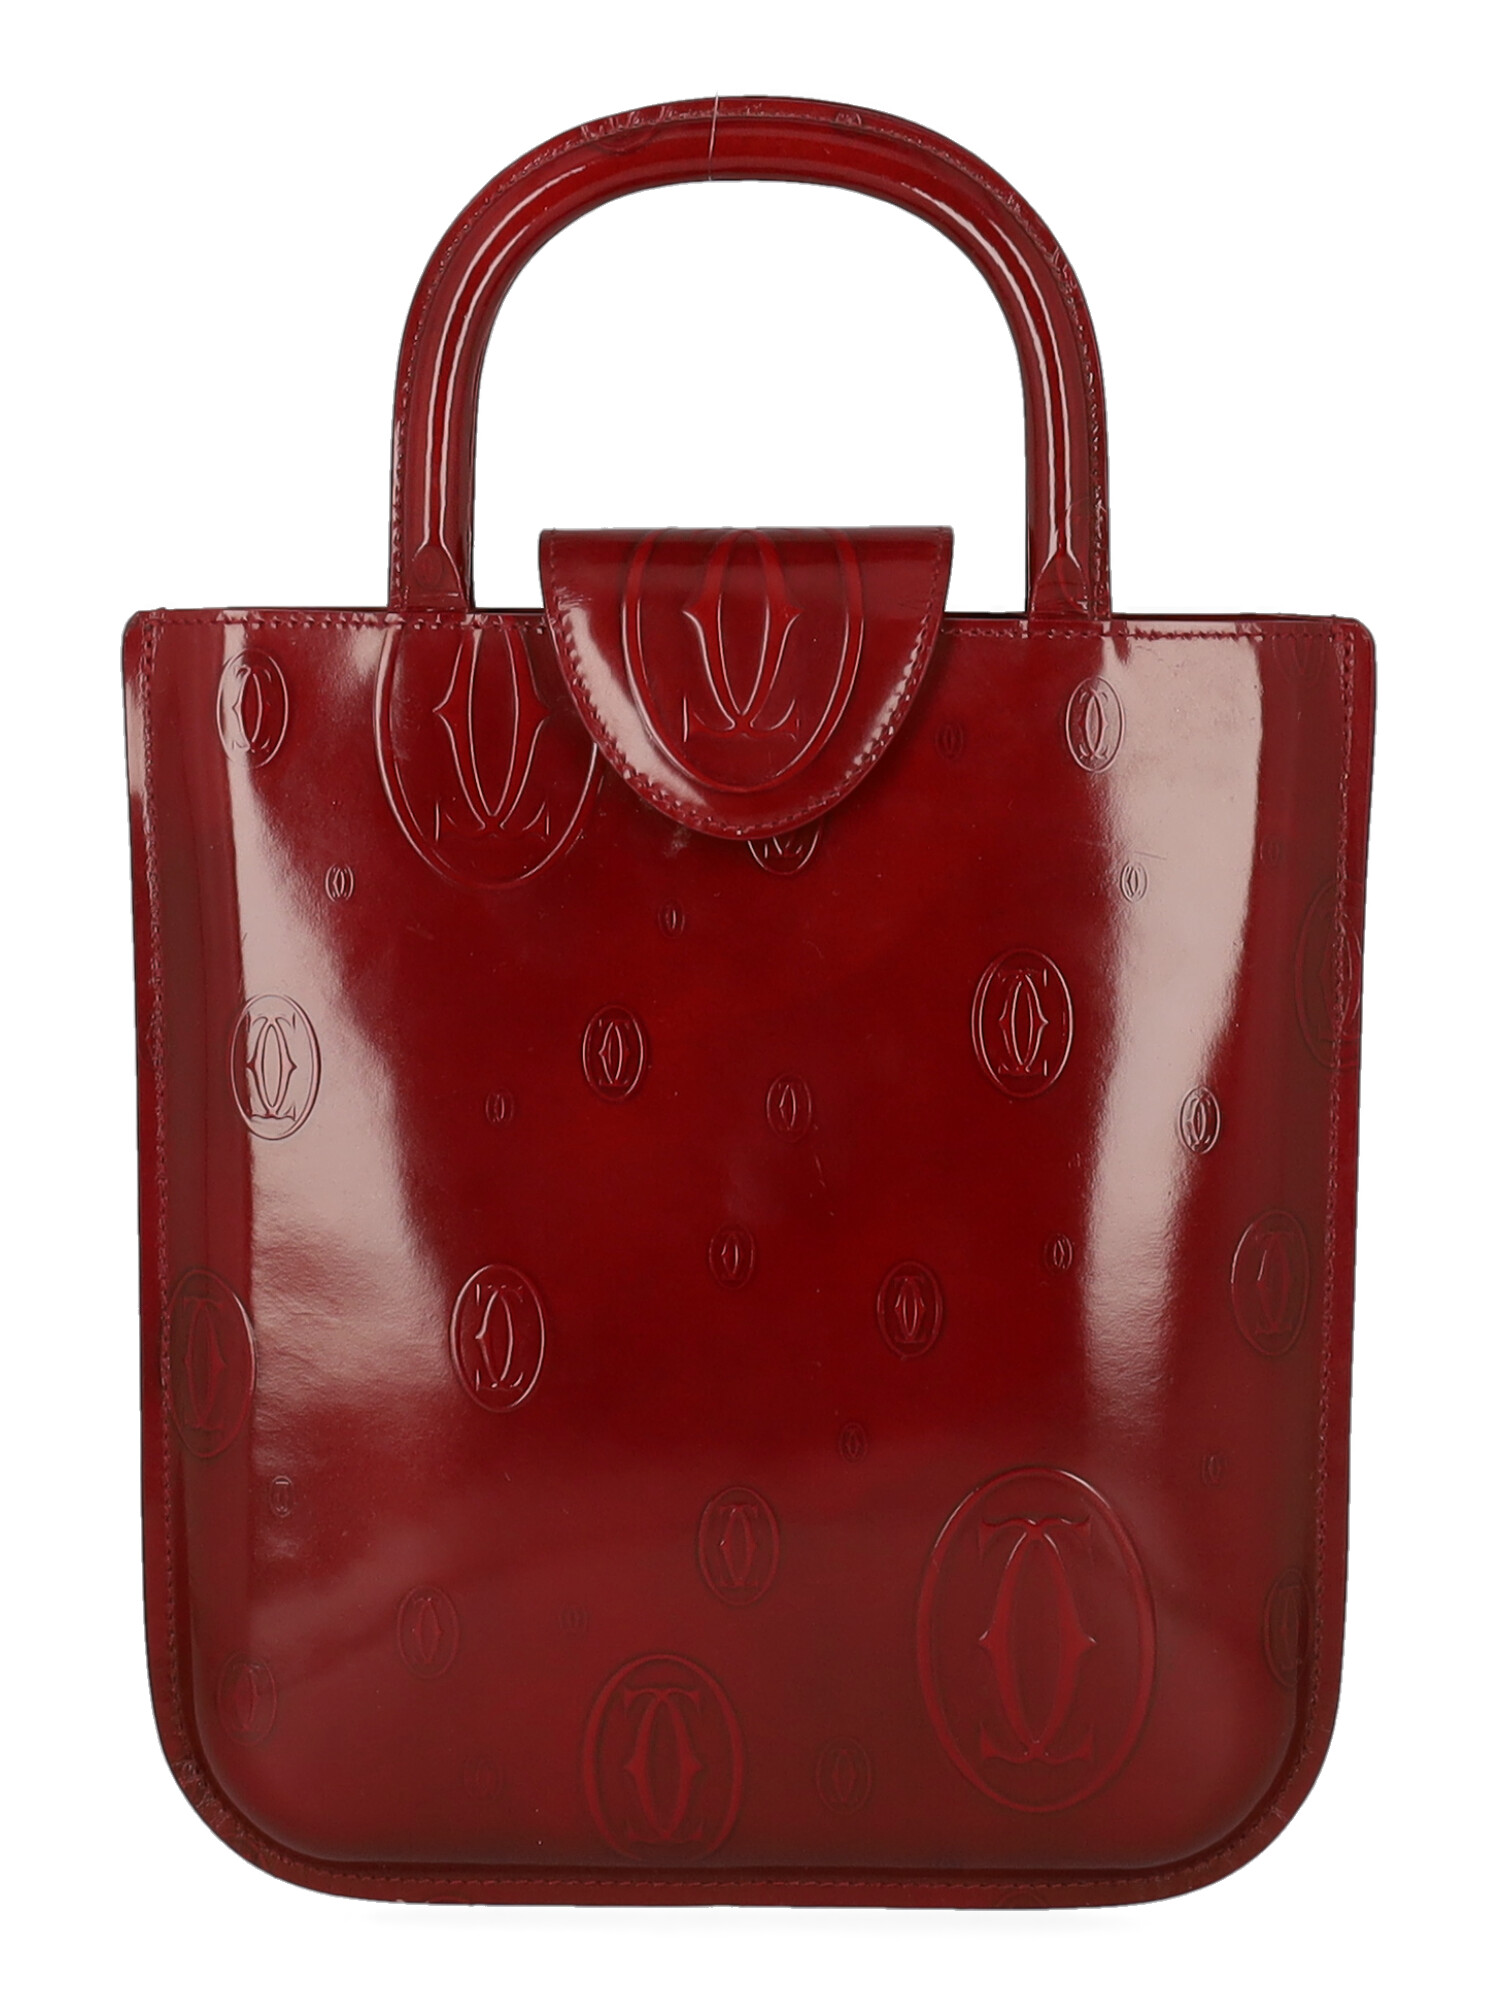 Cartier Femme Sacs à main Red Leather